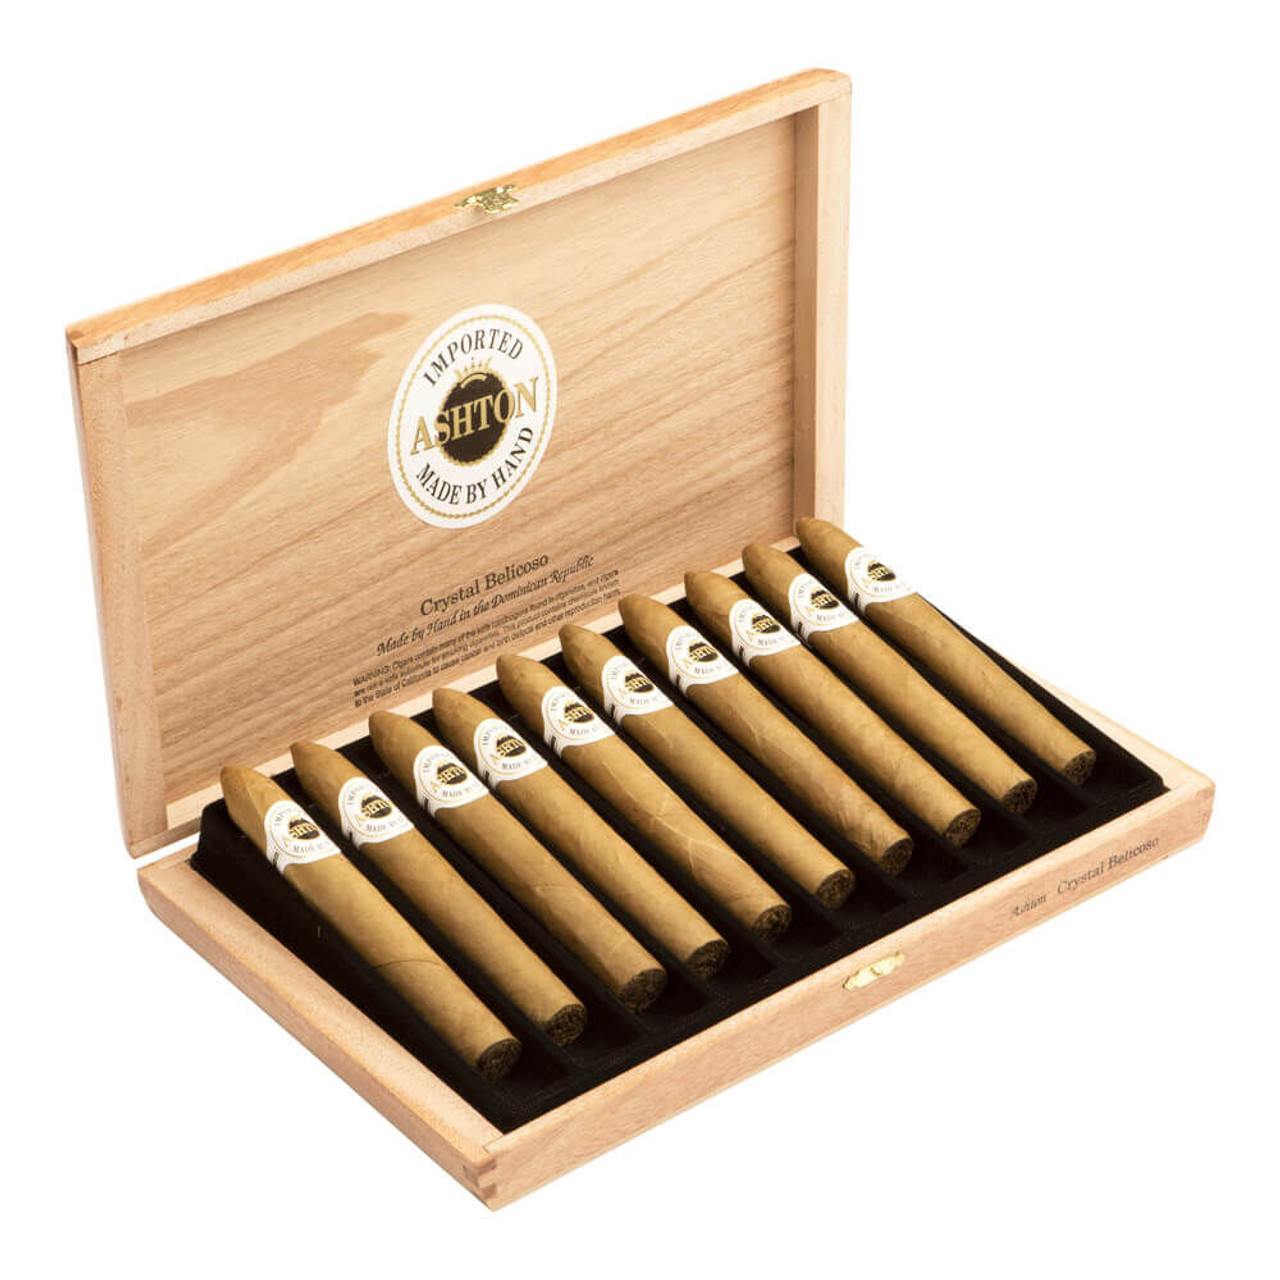 Ashton Crystal Belicoso Cigars - 6 x 49 (Box of 10) Open